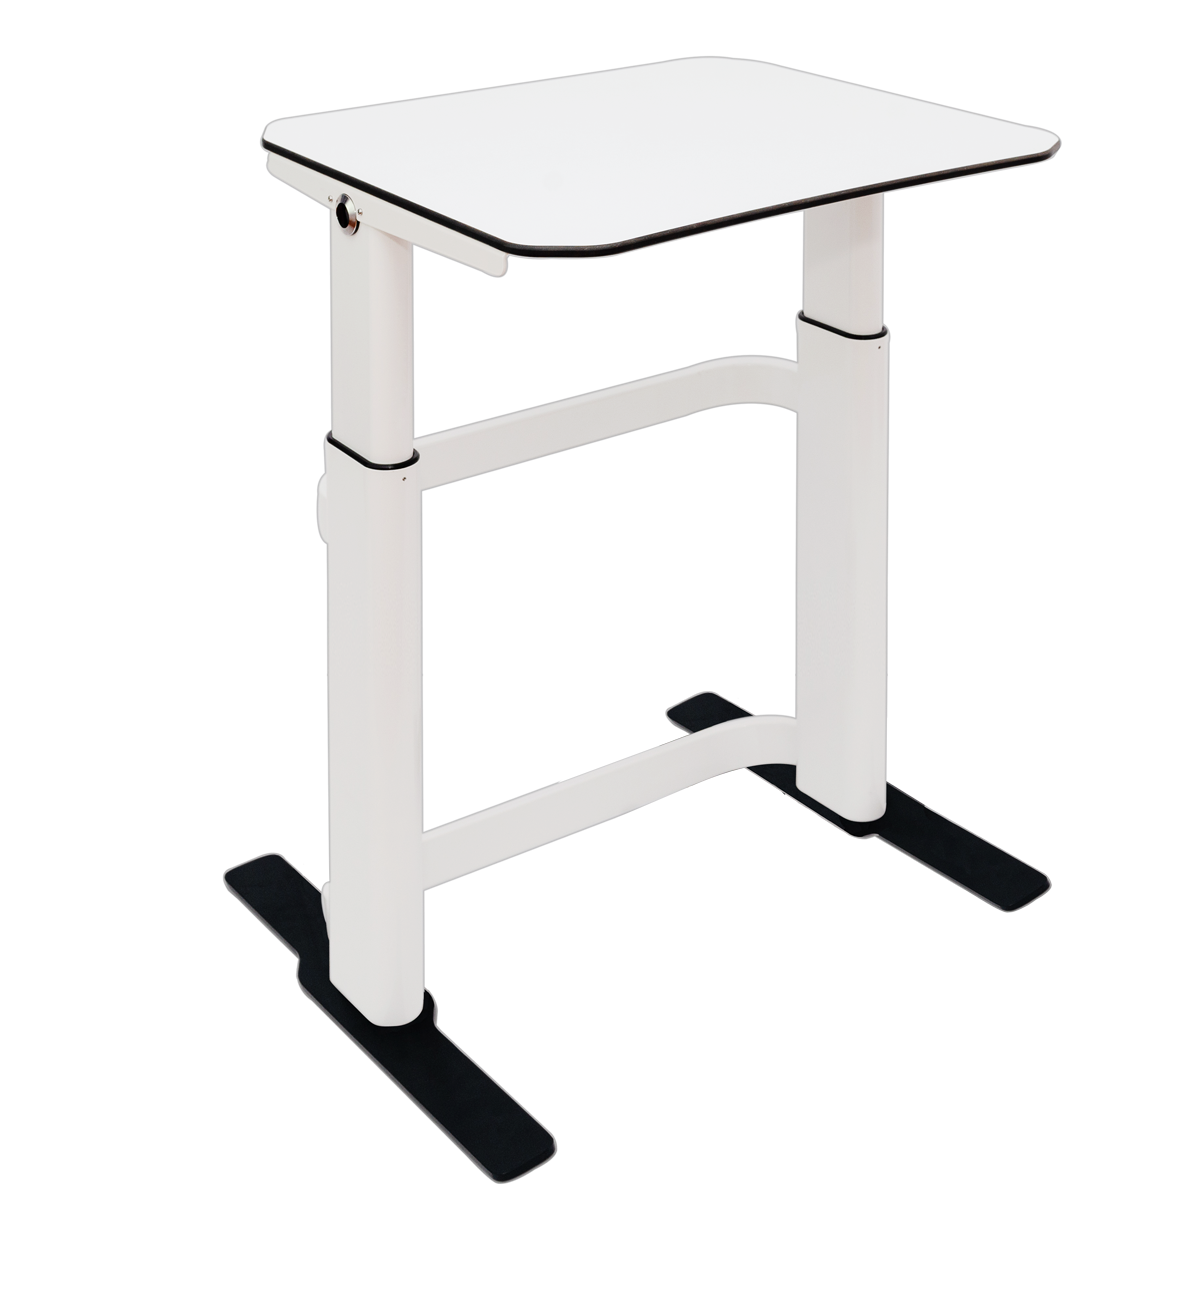 Amperstand-Large Desk-Non Writable-Steel Feet